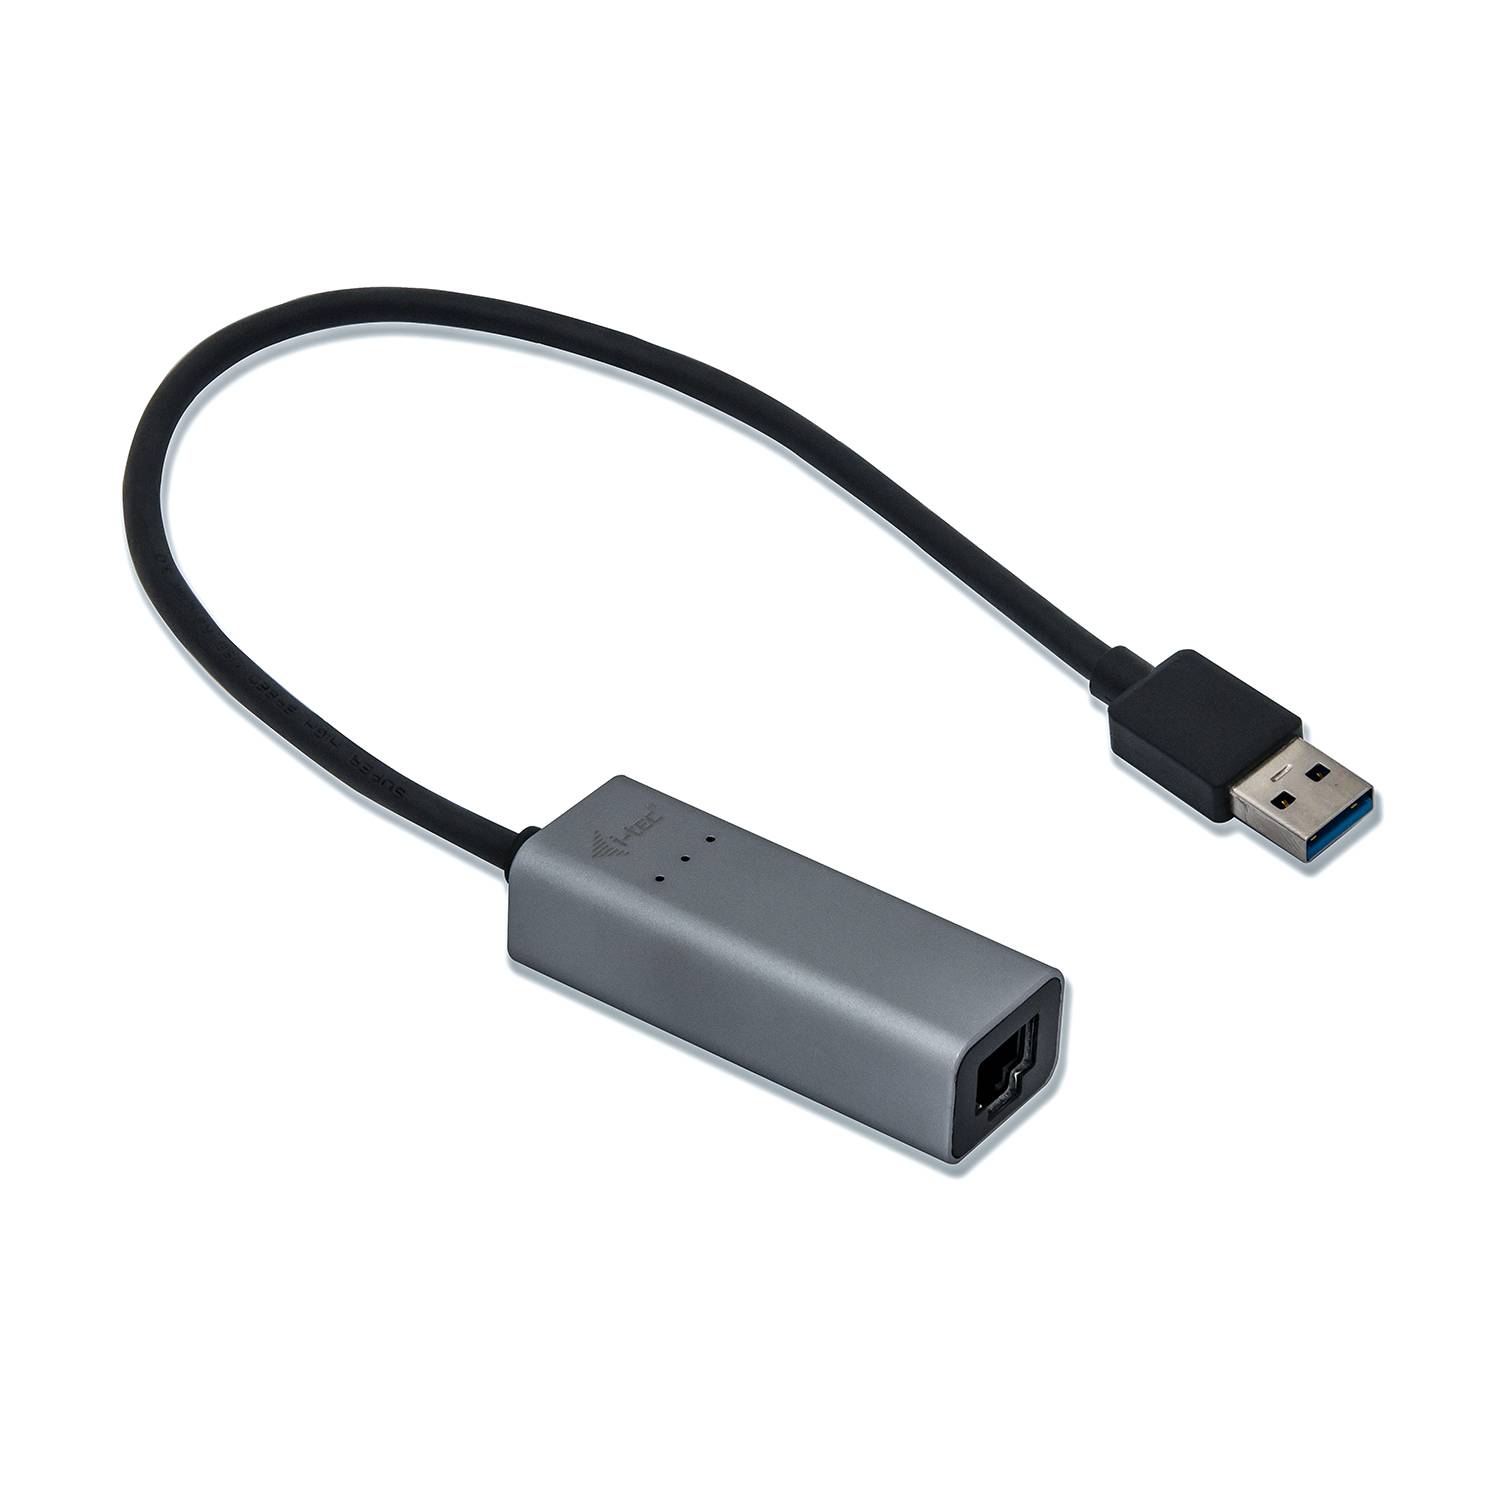 Rca Informatique - Image du produit : I-TEC USB 3.0 METAL GLAN ADAP. USB 3.0 TO RJ-45/ UP TO 1 GBPS